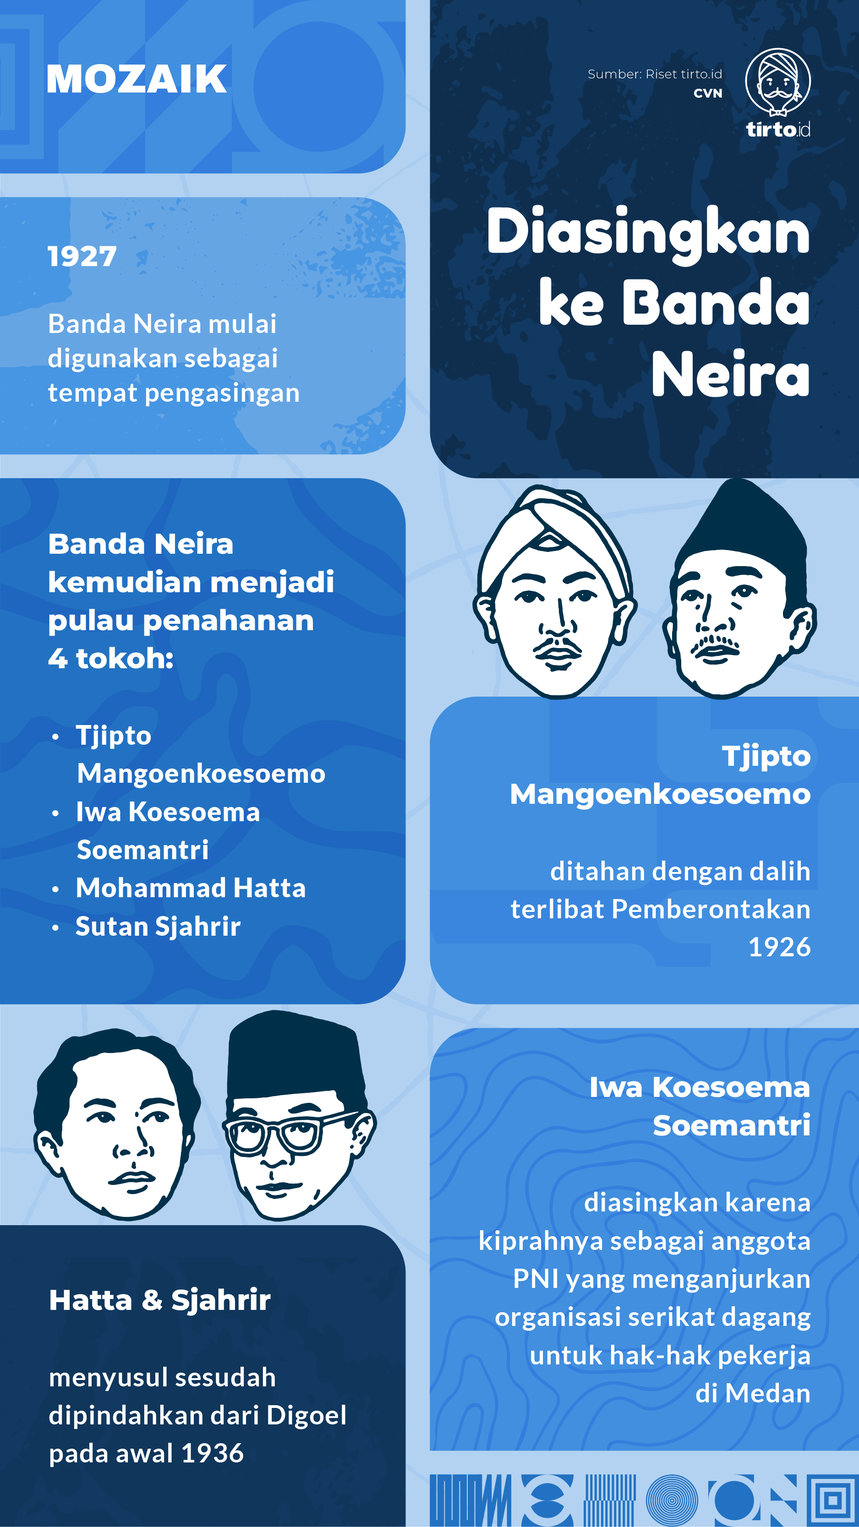 Infografik Mozaik Diasingkan ke Banda Neira